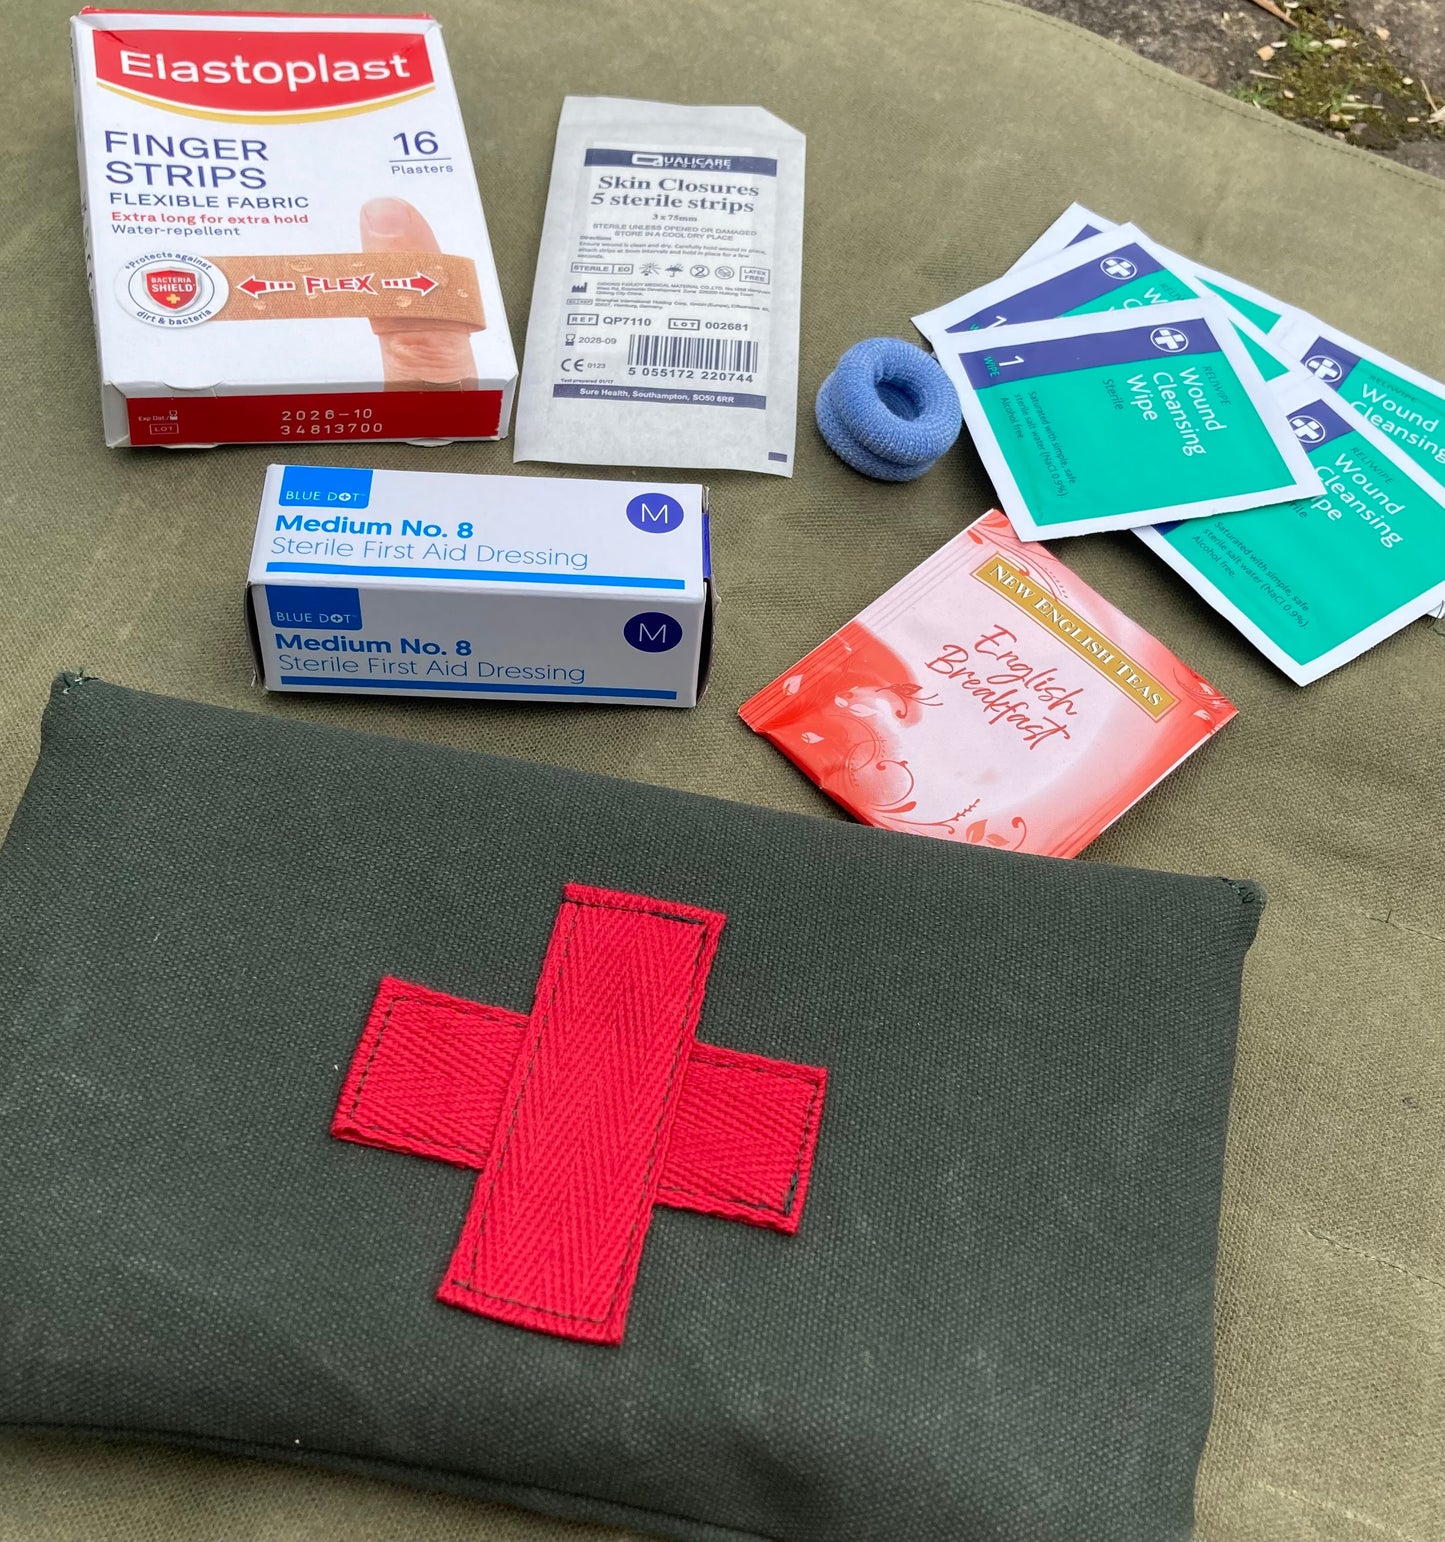 Whittlers Emergency Kit